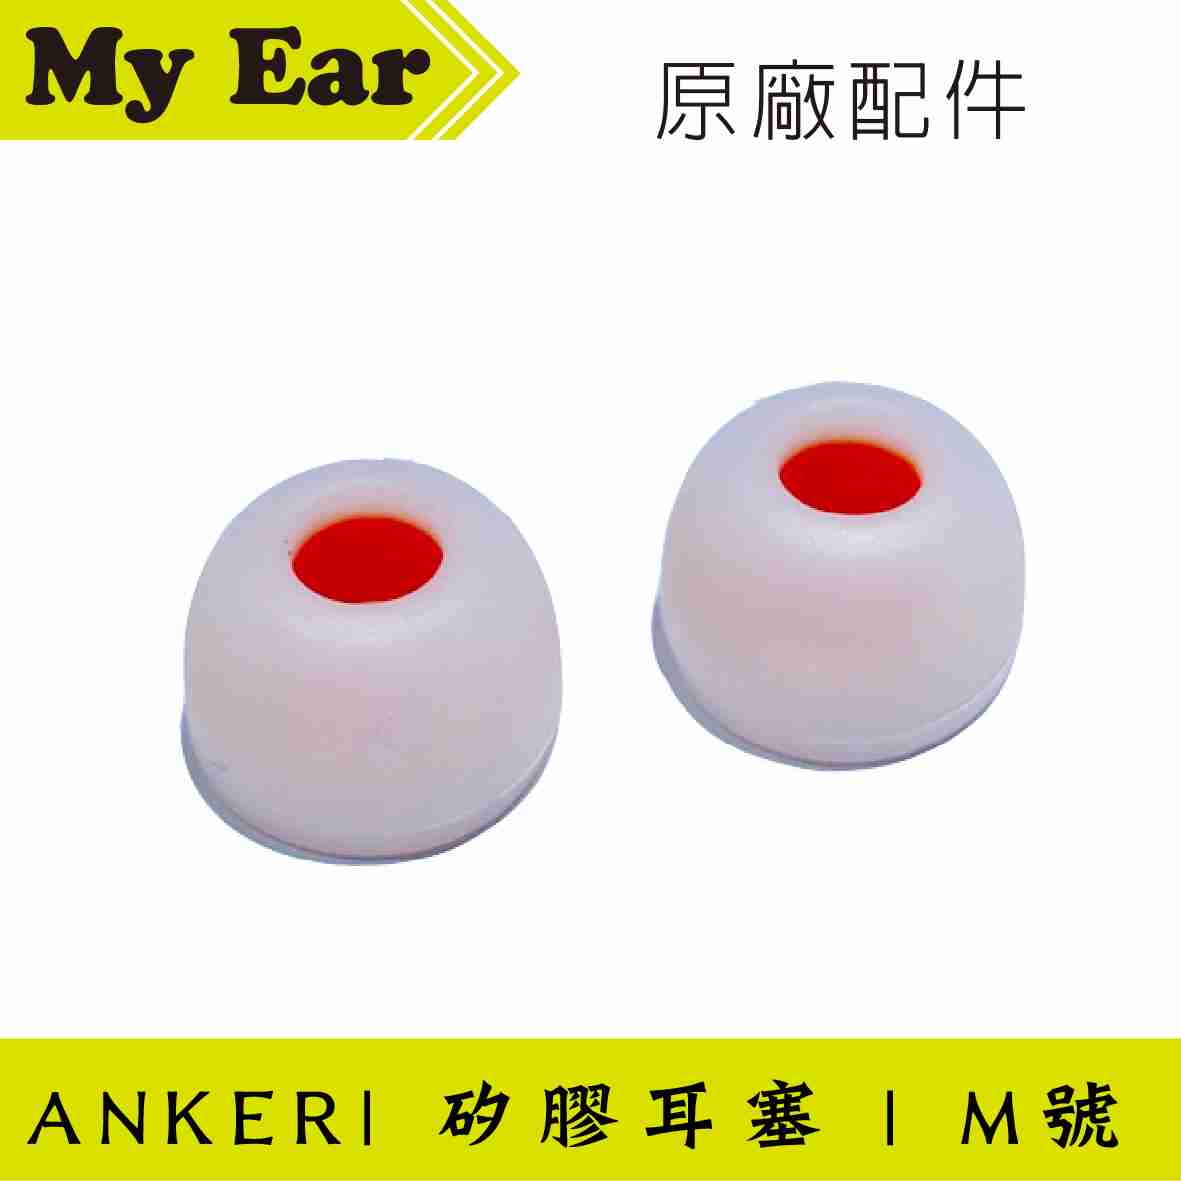 ANKER M 一對 原廠 矽膠 耳塞 散裝 | My Ear 耳機專門店